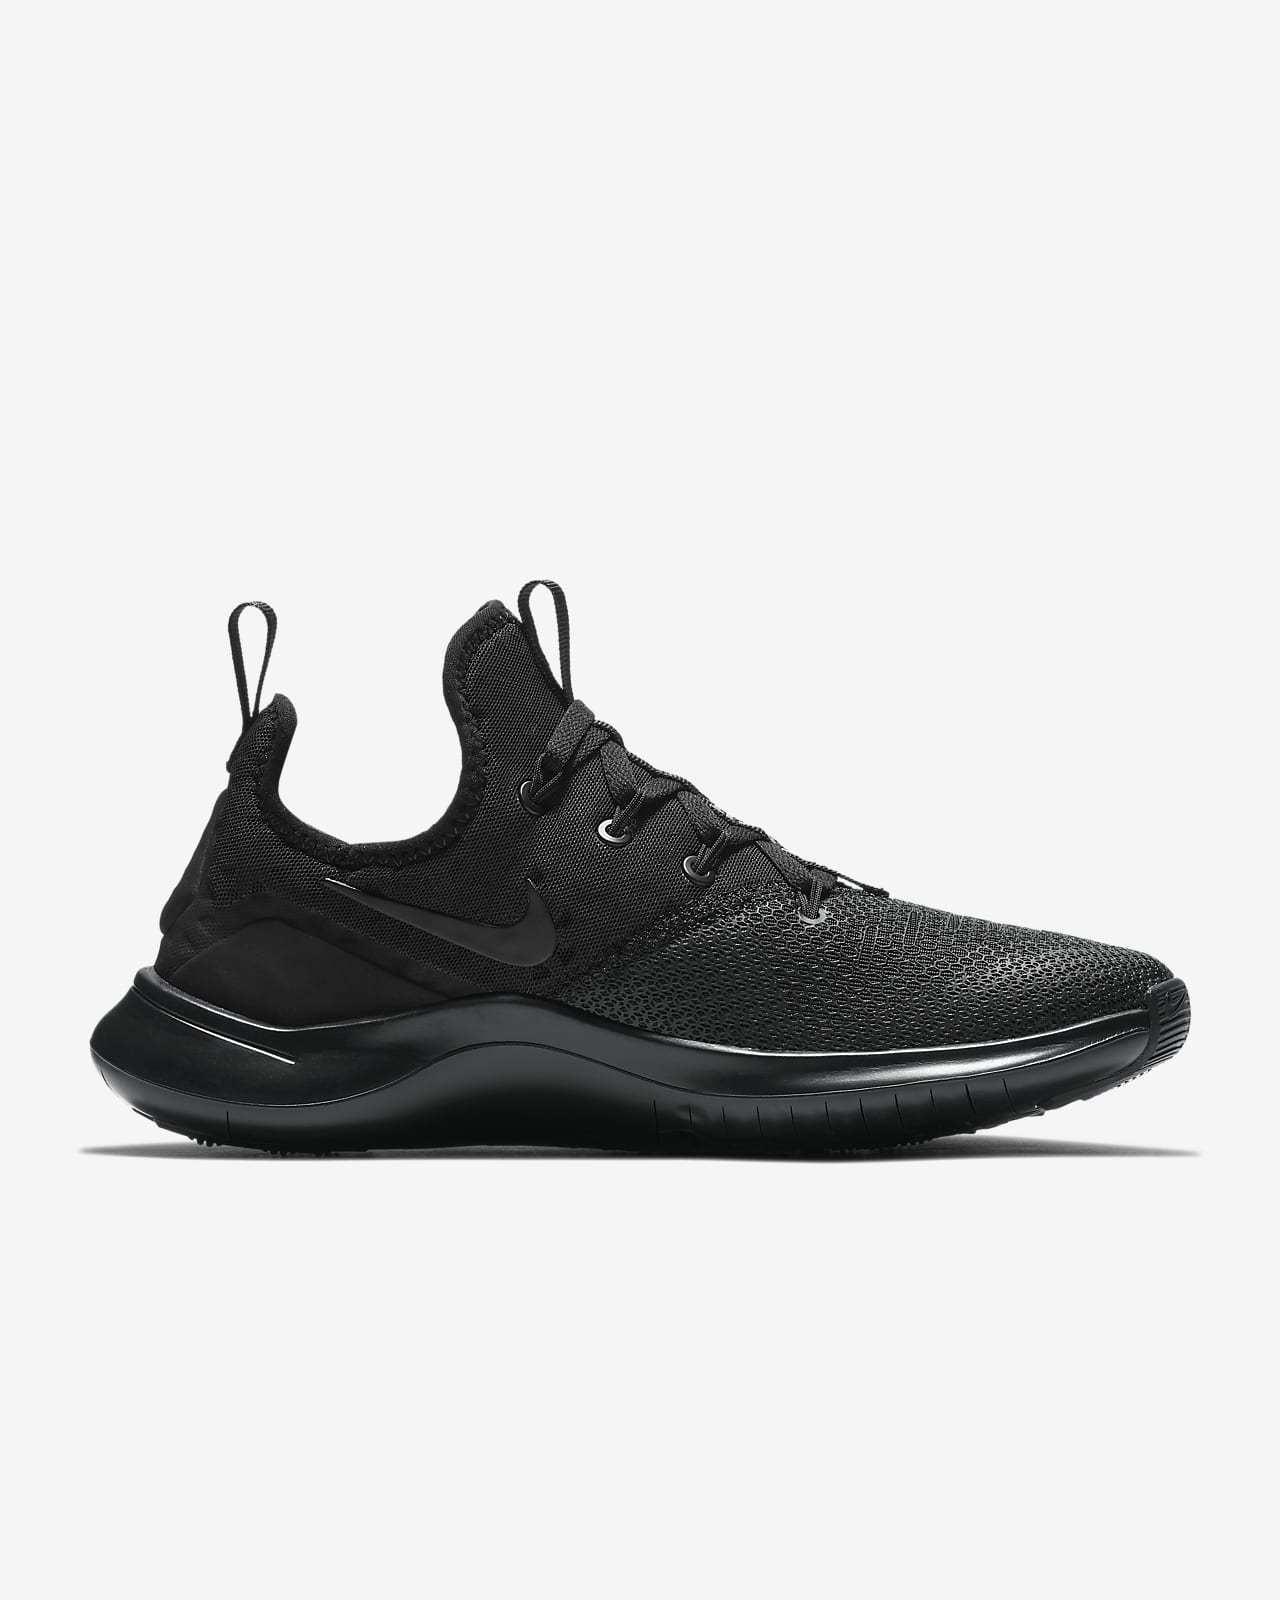 Nike Free TR 8 Training Shoes - Black/Black, Size 6.5